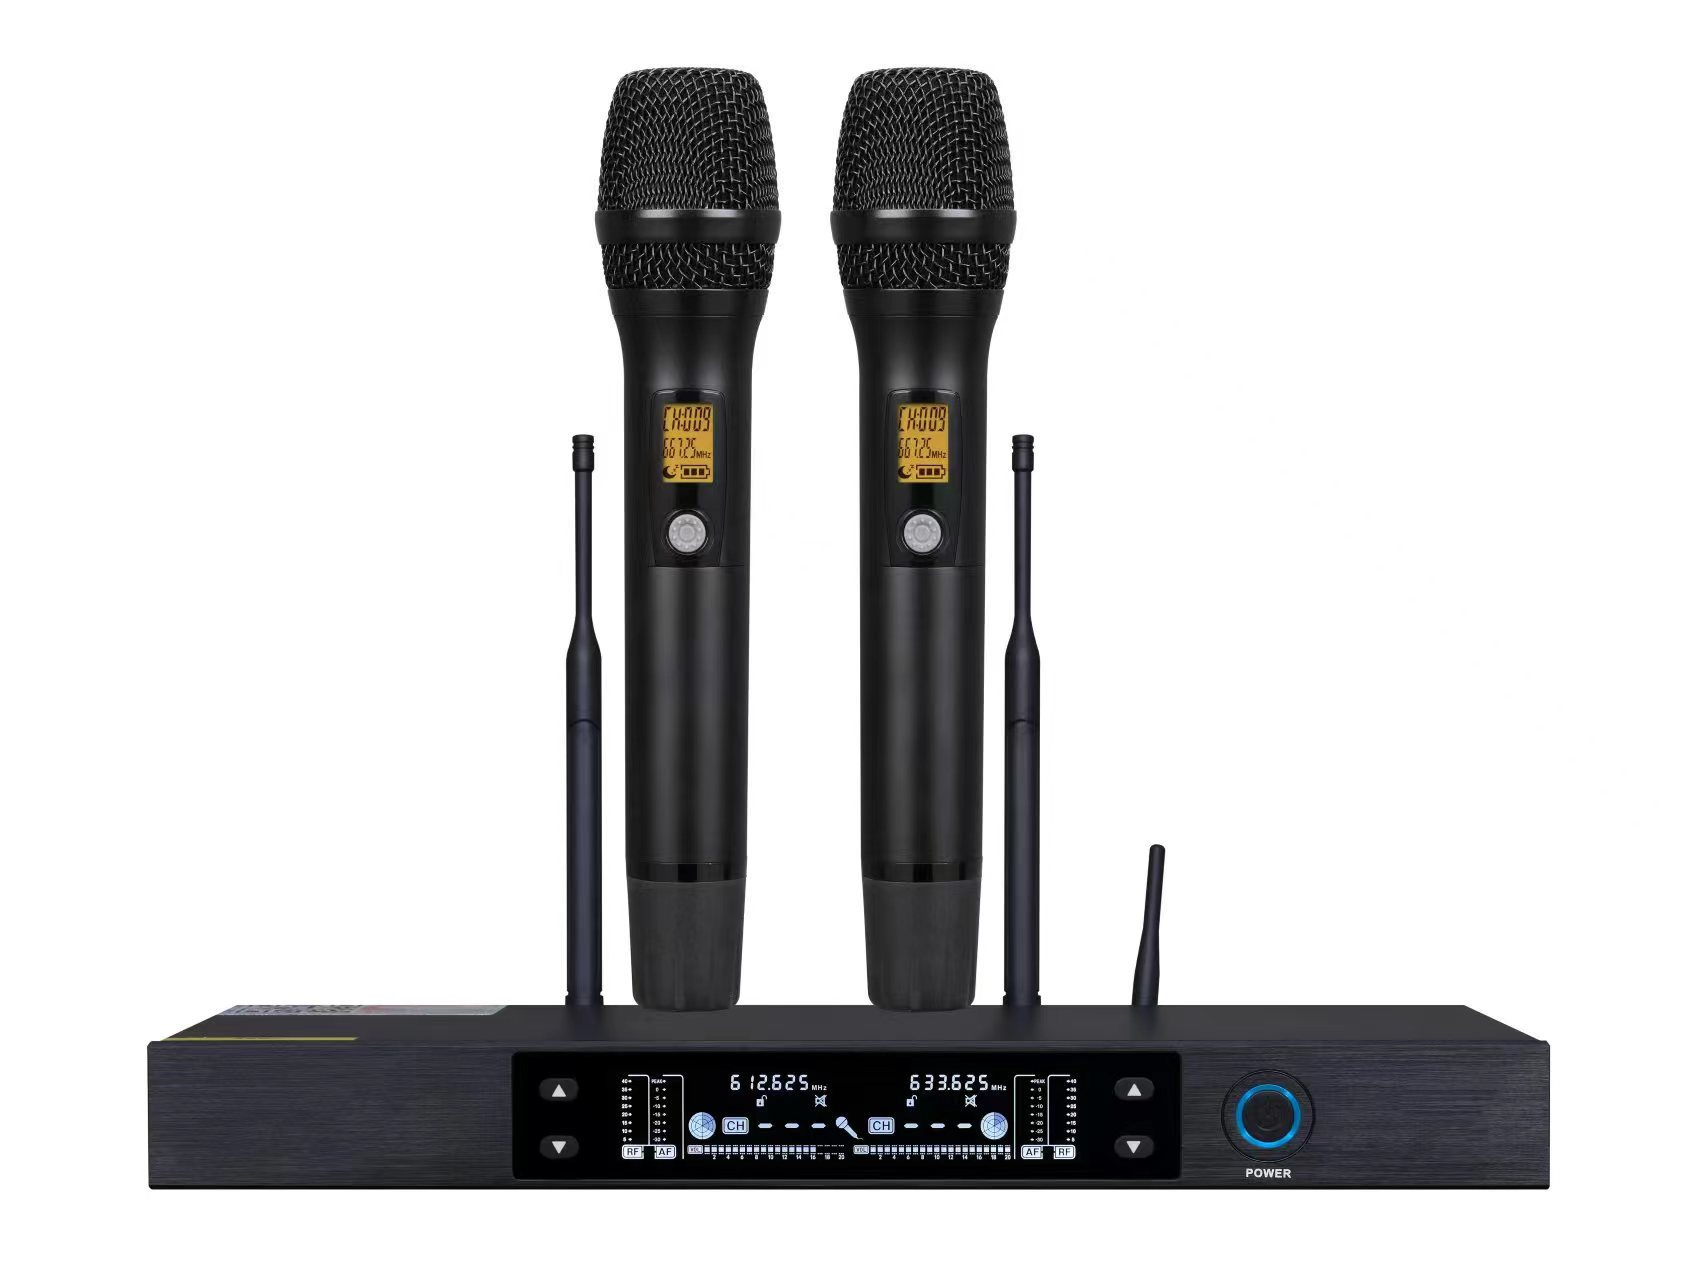 KS 2-T2S Fully intelligent wireless microphone